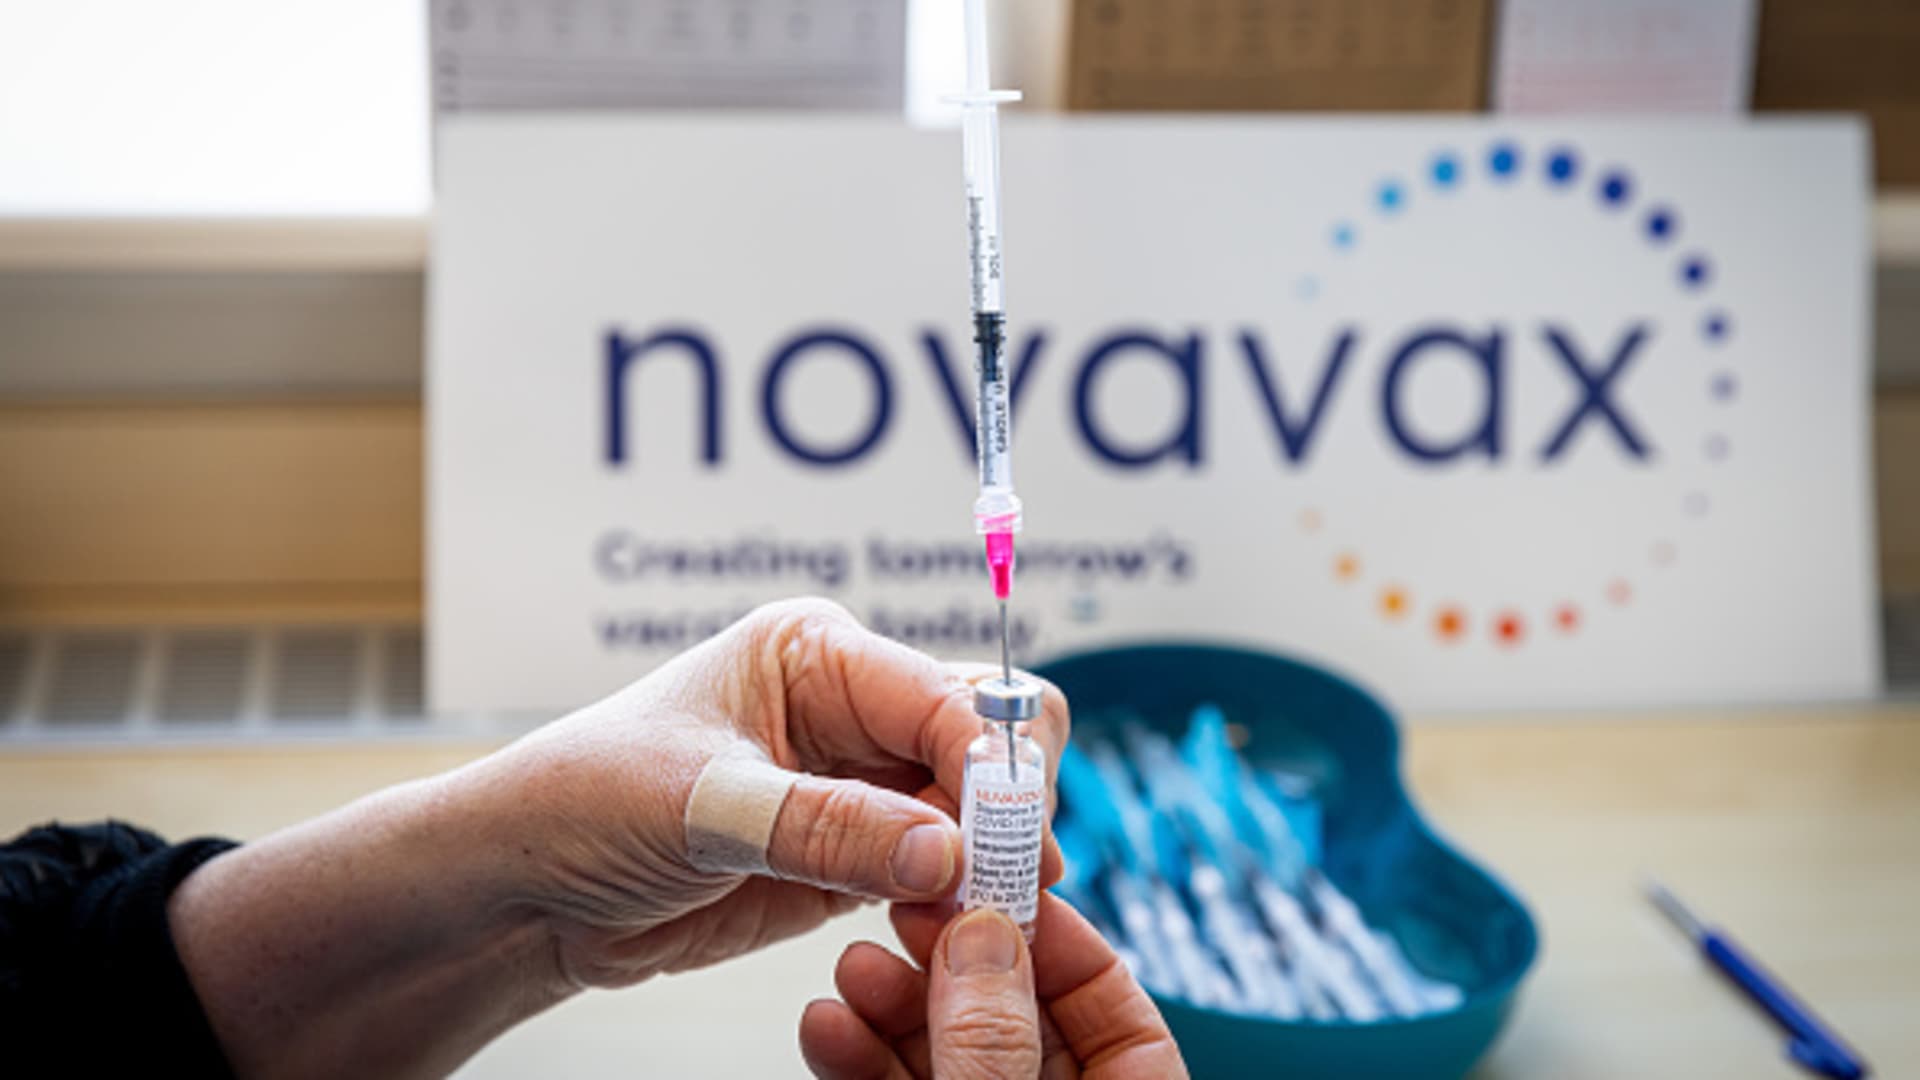 Novavax surges after company unveils job cuts, positive vaccine data